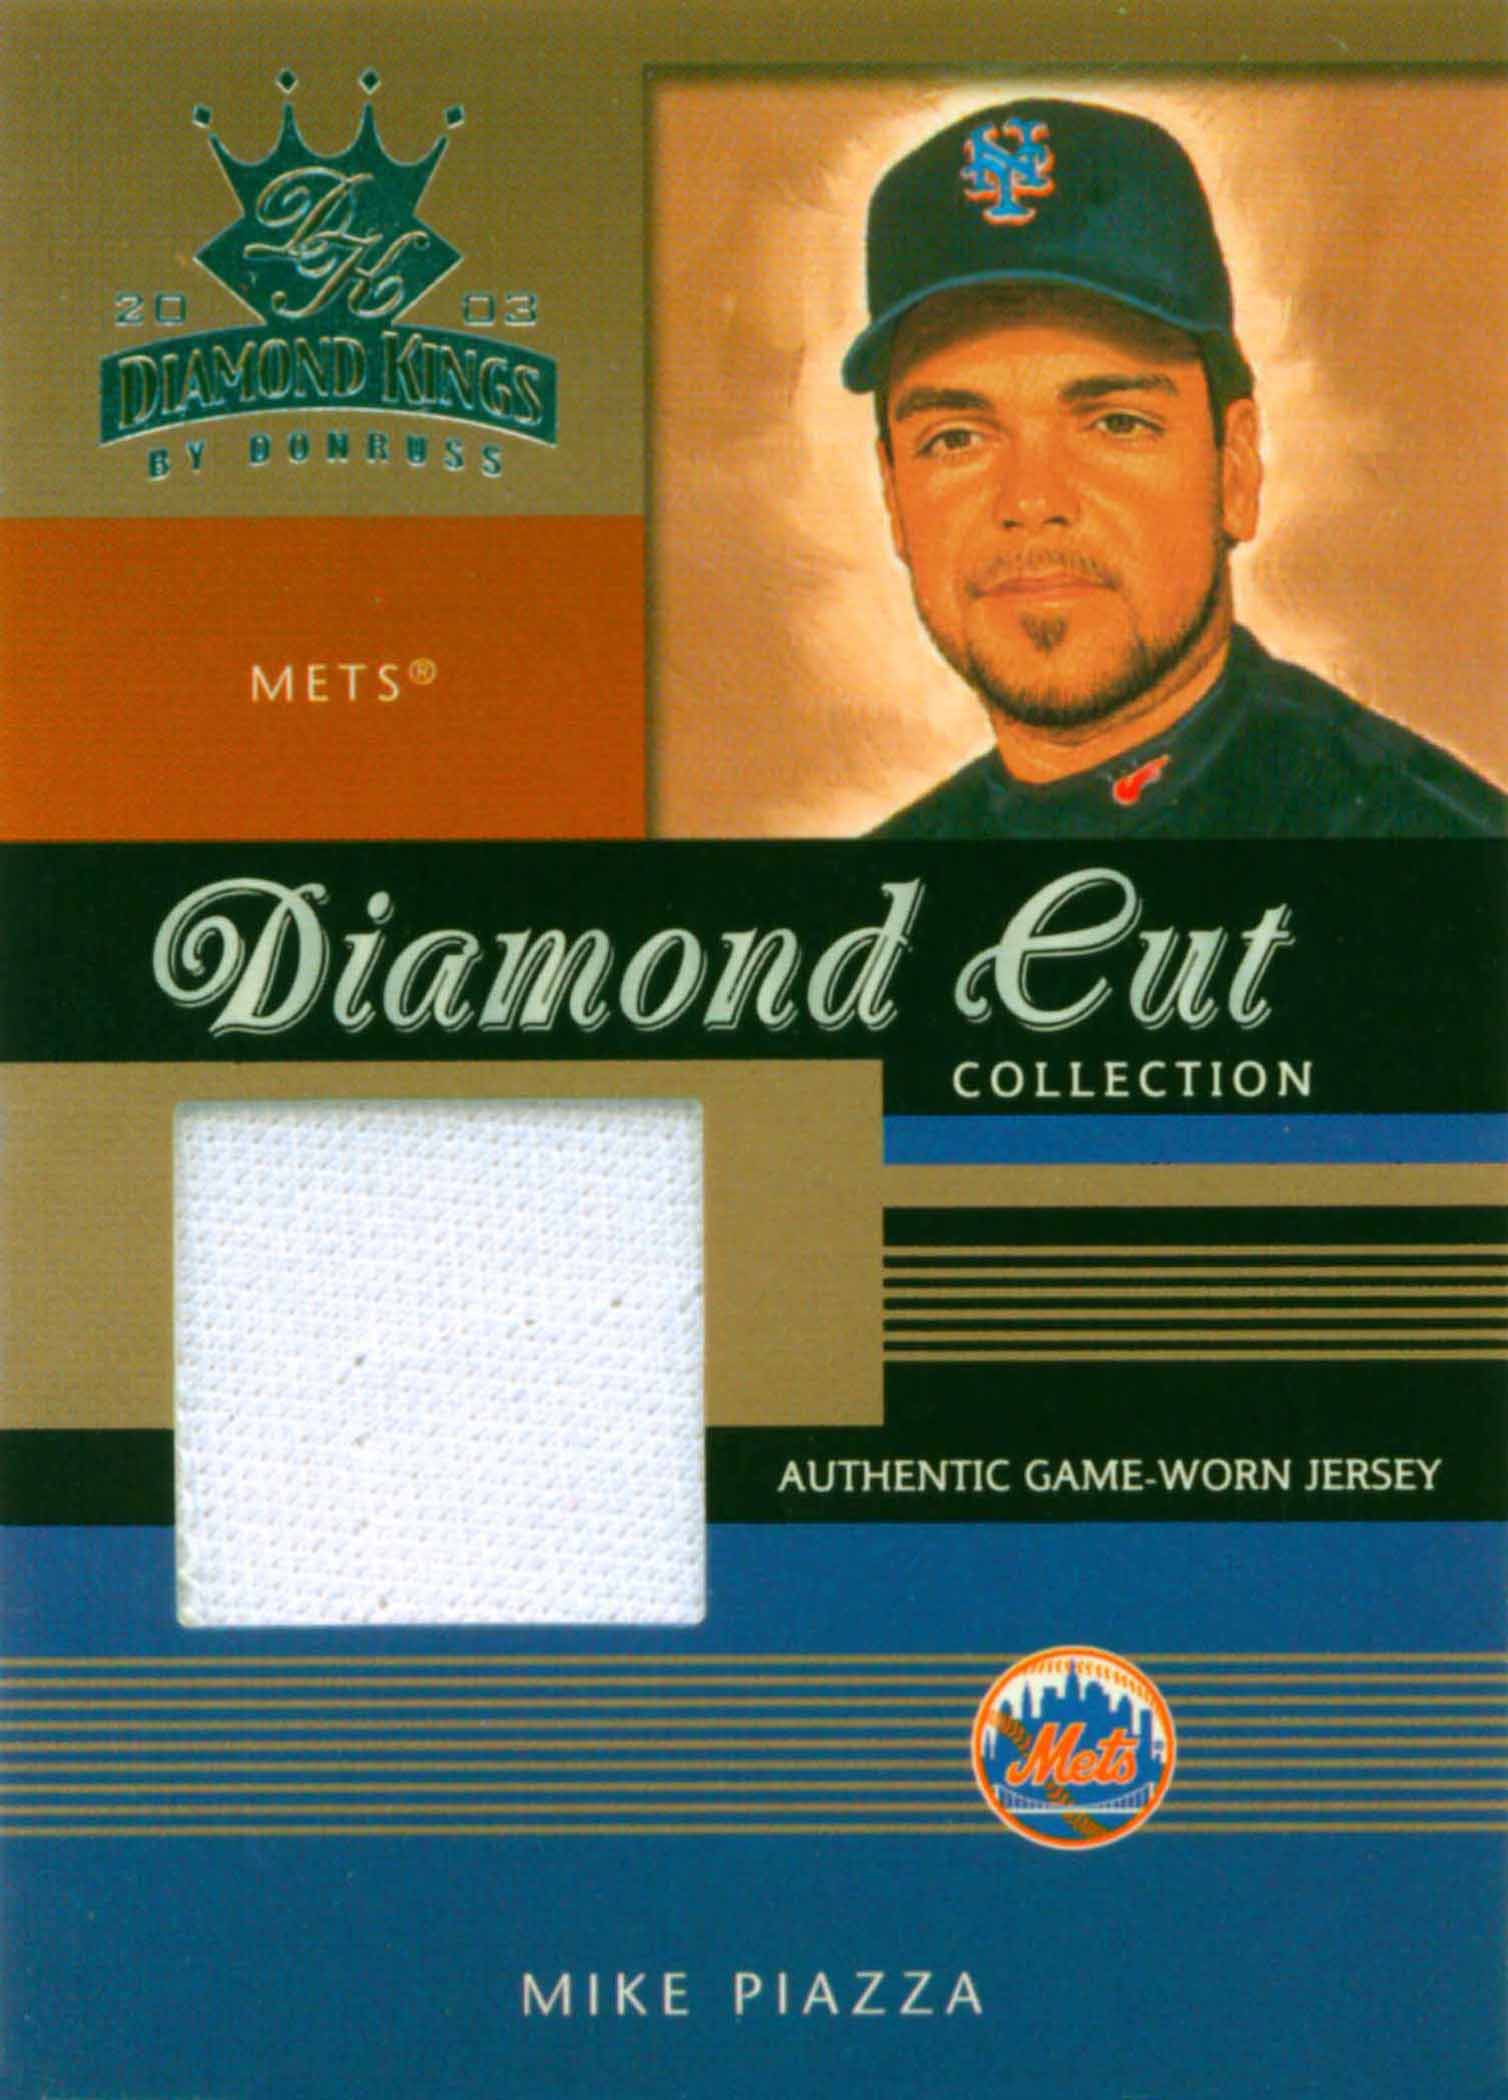 2003 Diamond Kings Diamond Cut Collection Jersey